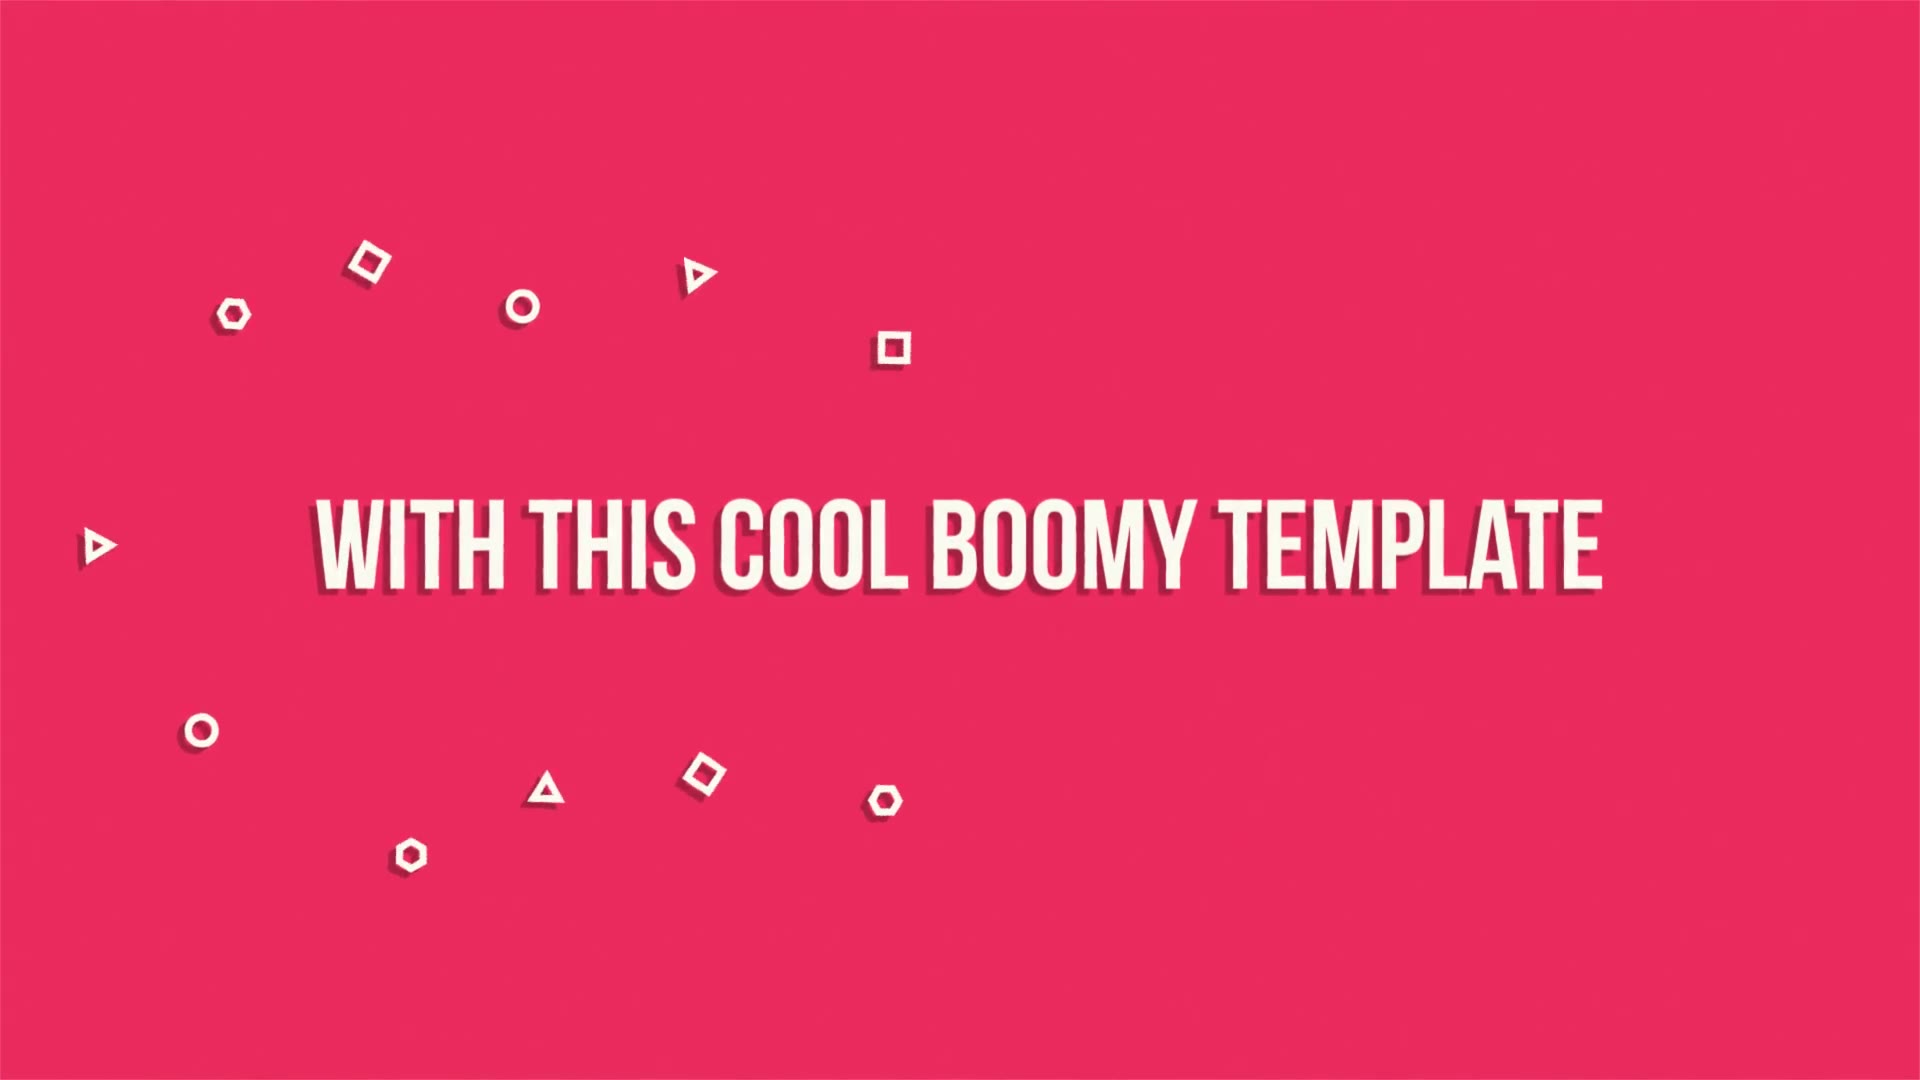 The Bim Bam Template - Download Videohive 16039109